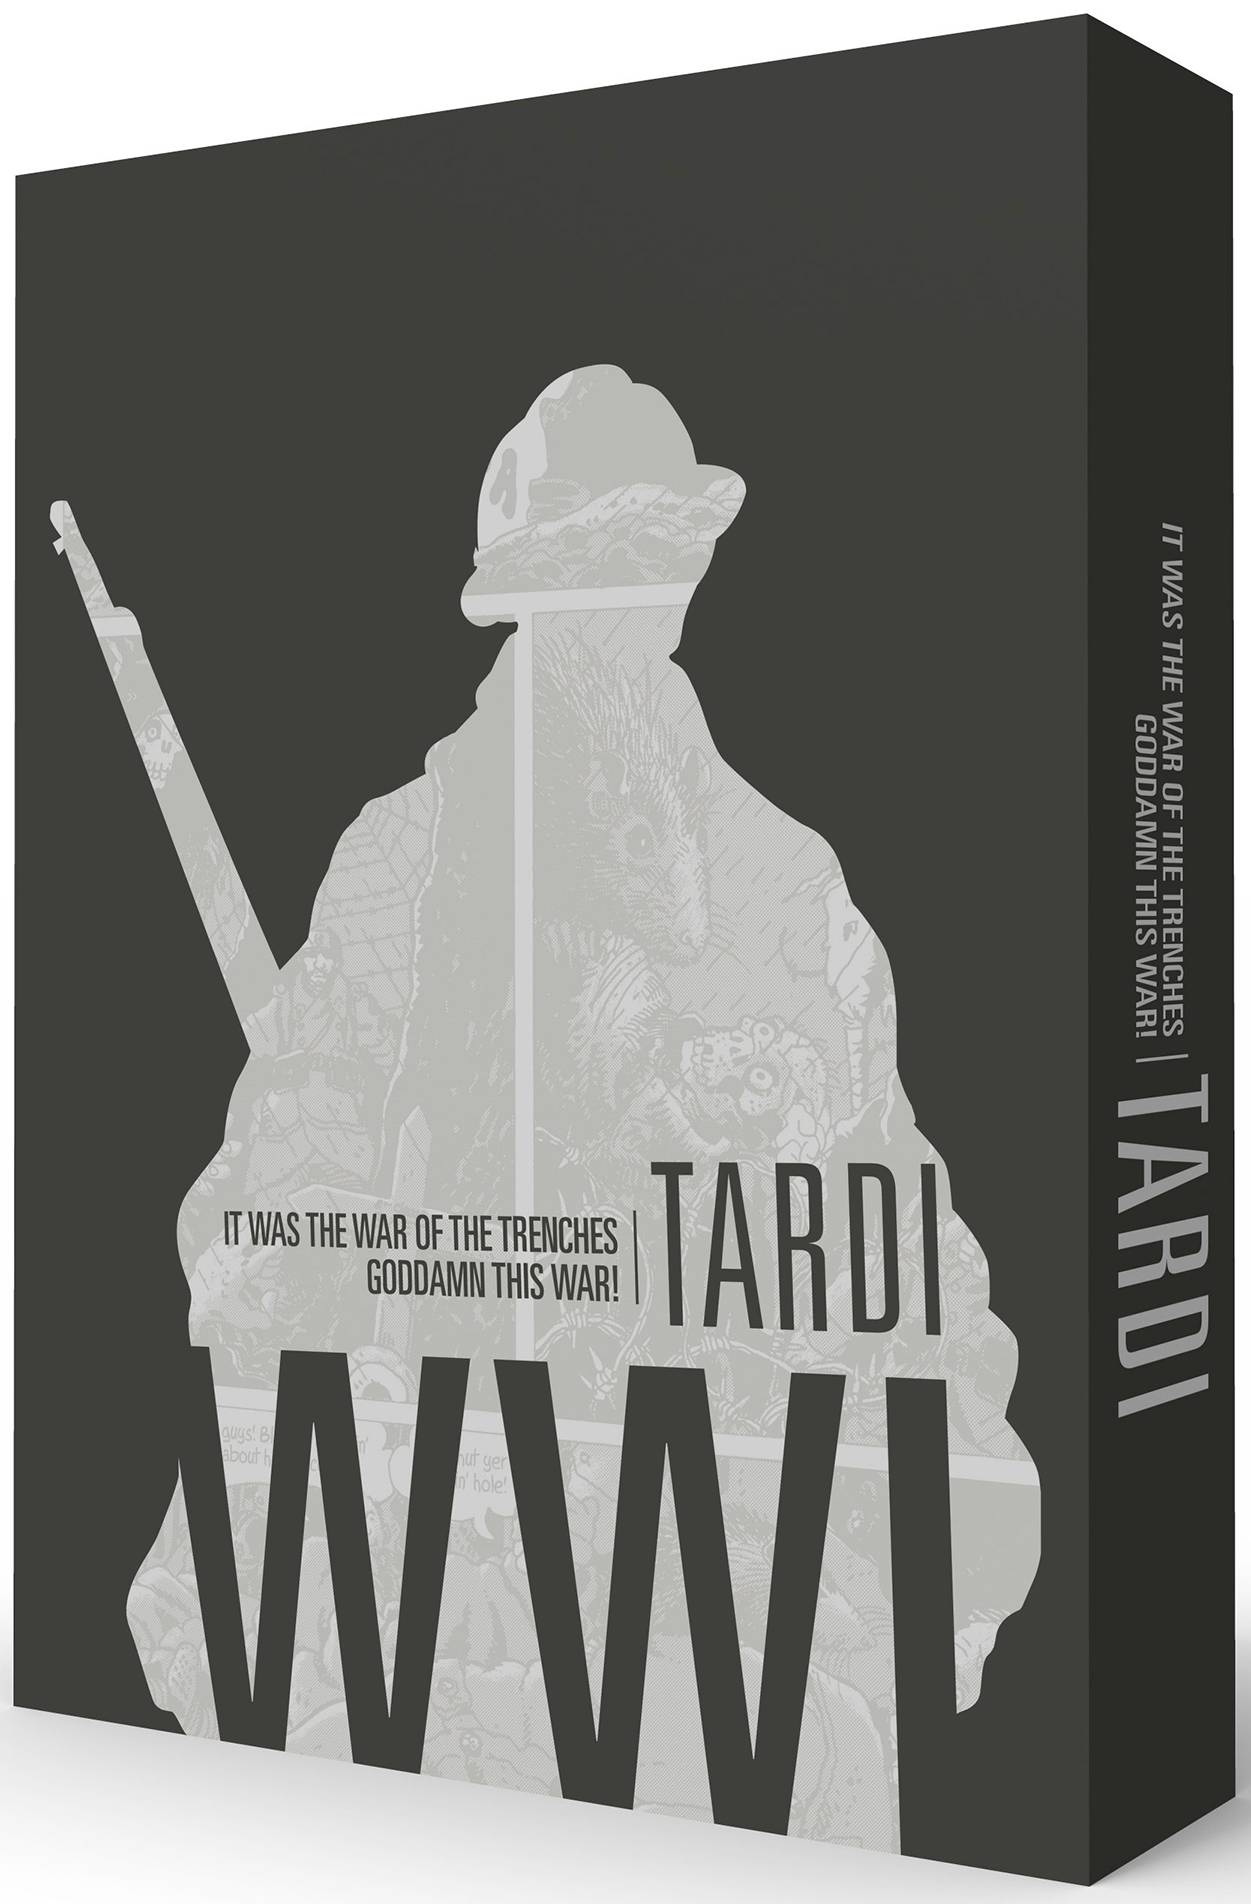 Tardi Wwi Hardcover Box Set War Trenches & Goddamn War